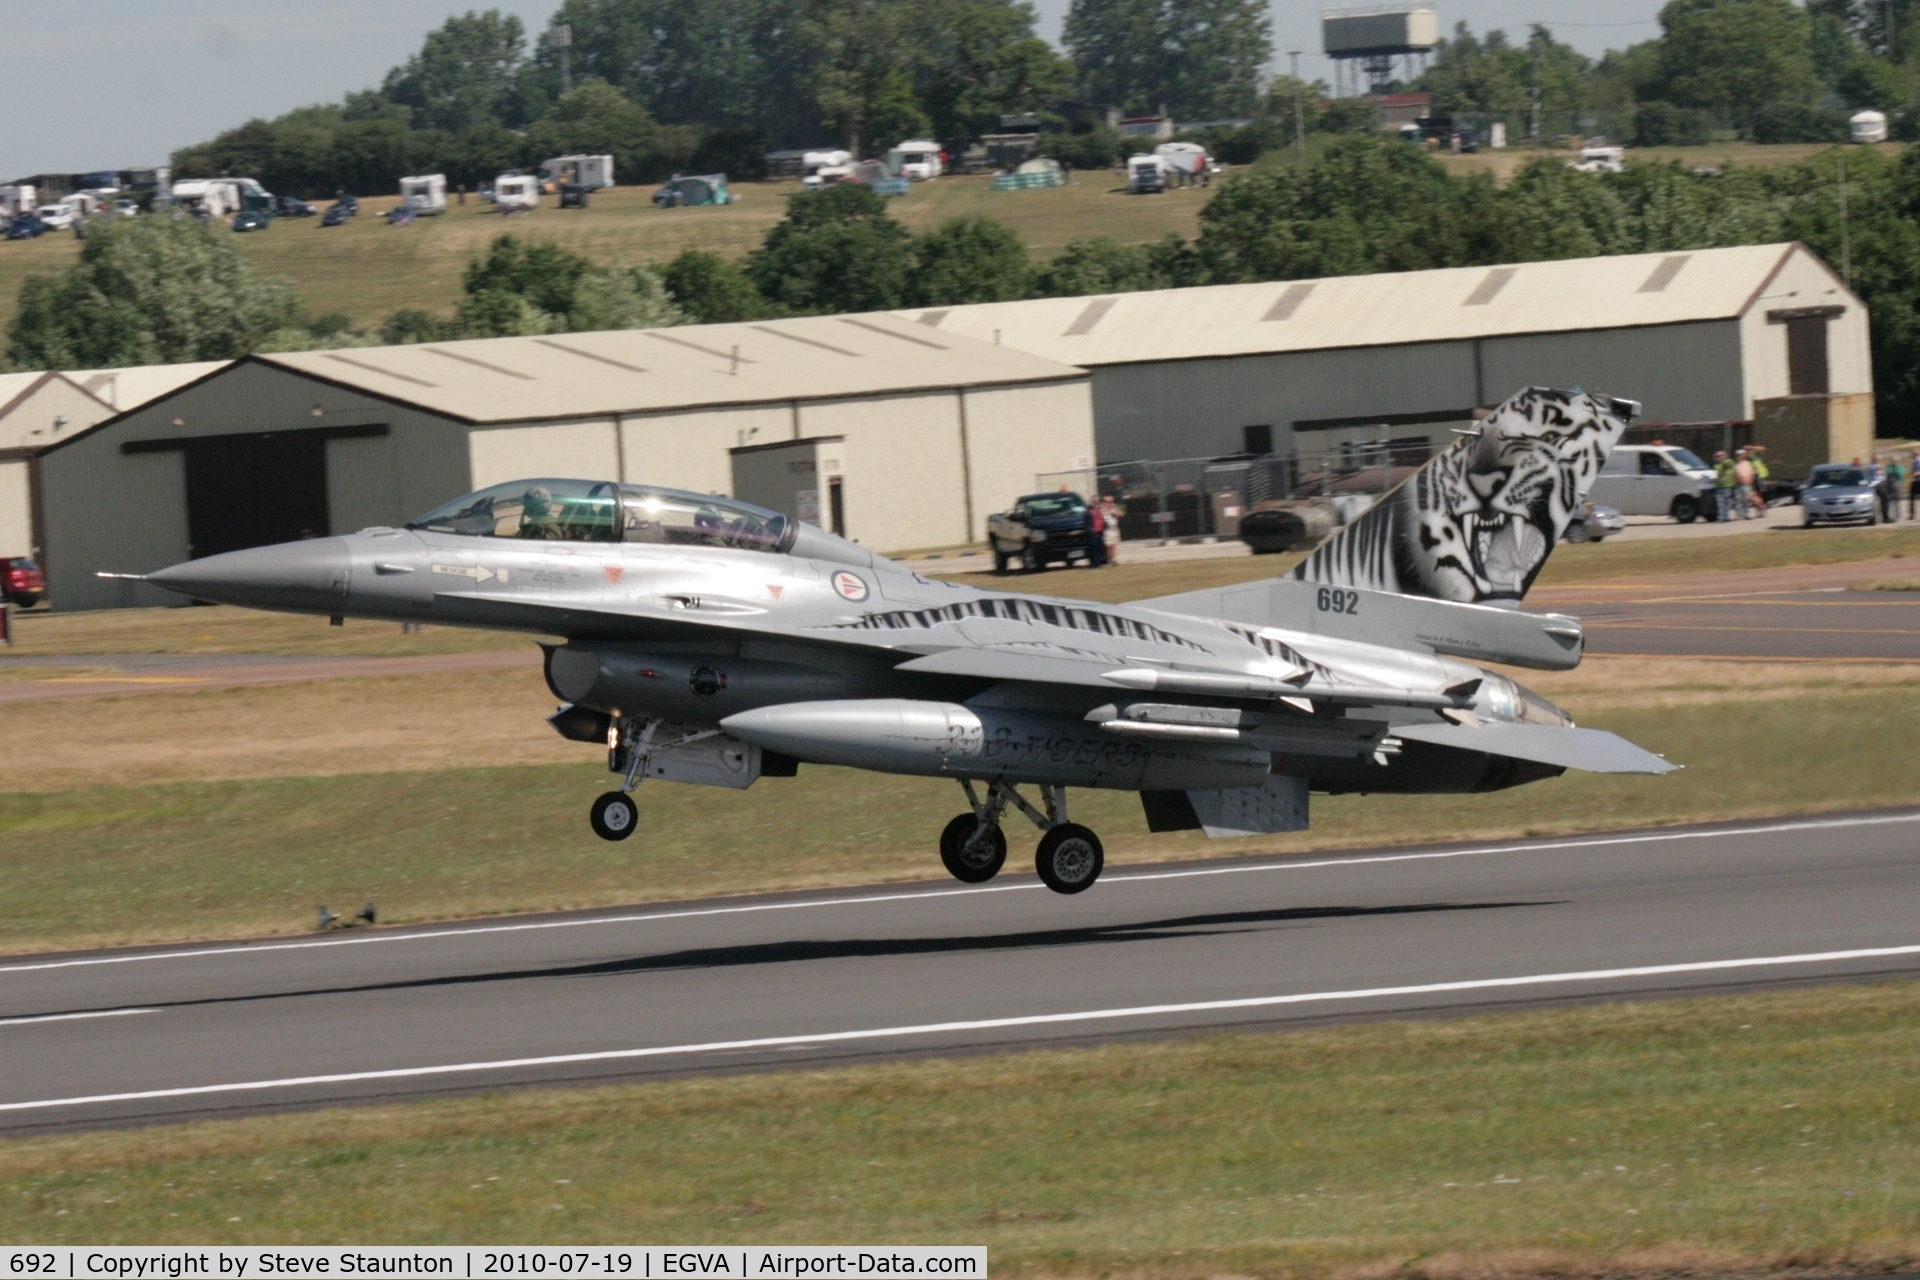 692, 1980 General Dynamics F-16BM Fighting Falcon C/N 6L-11, Taken at the Royal International Air Tattoo 2010